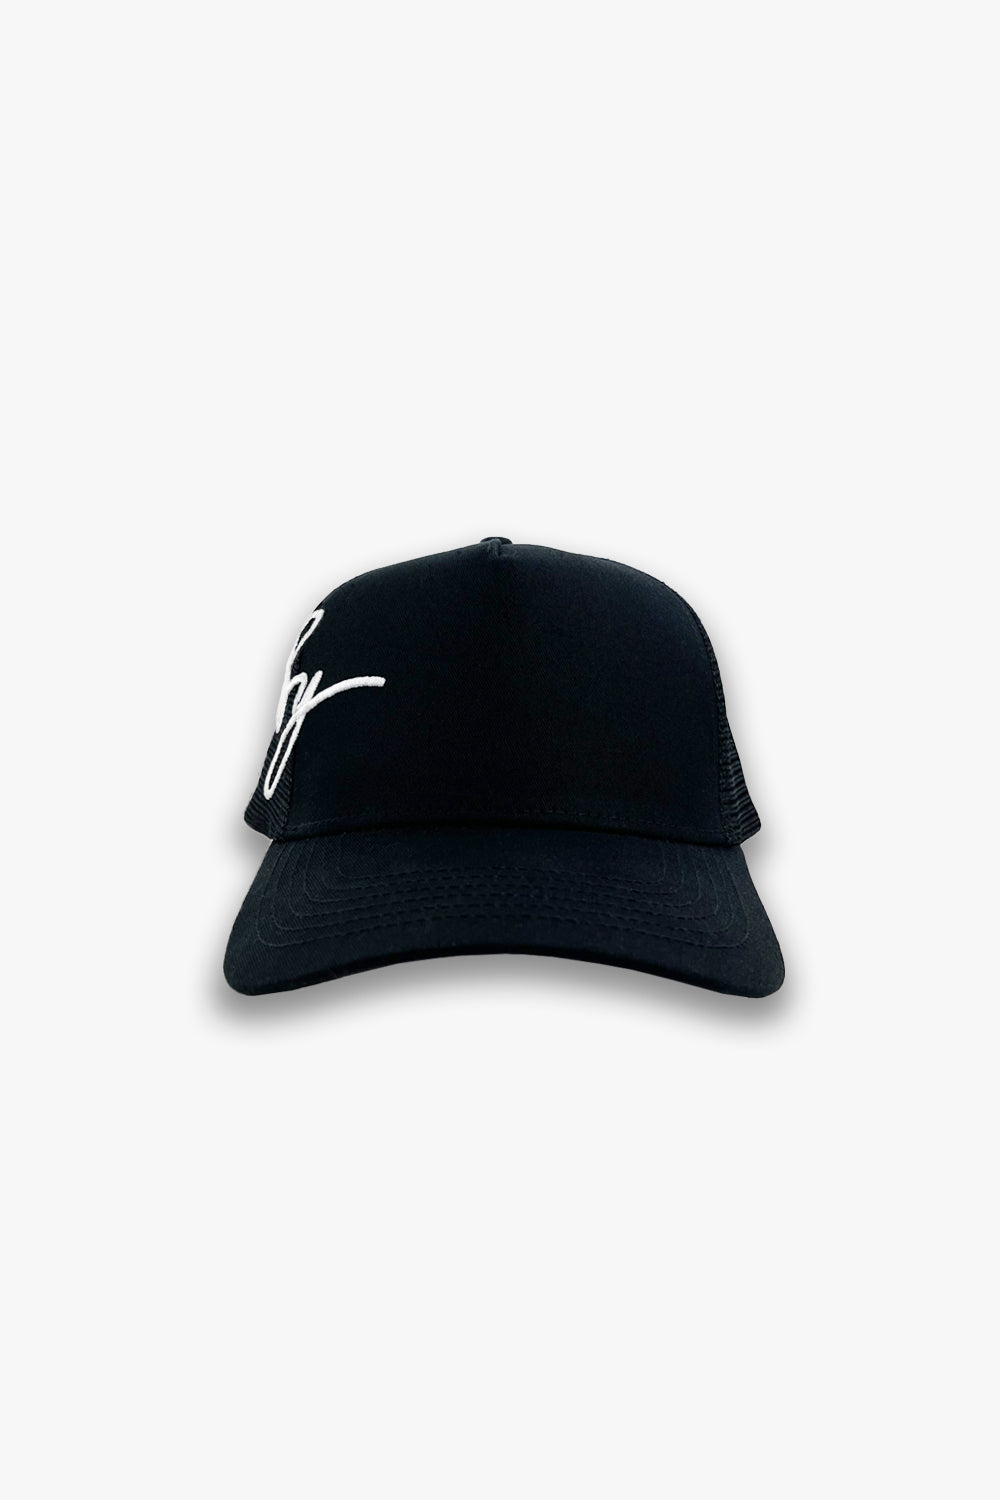 Designer Trucker Hat - Black